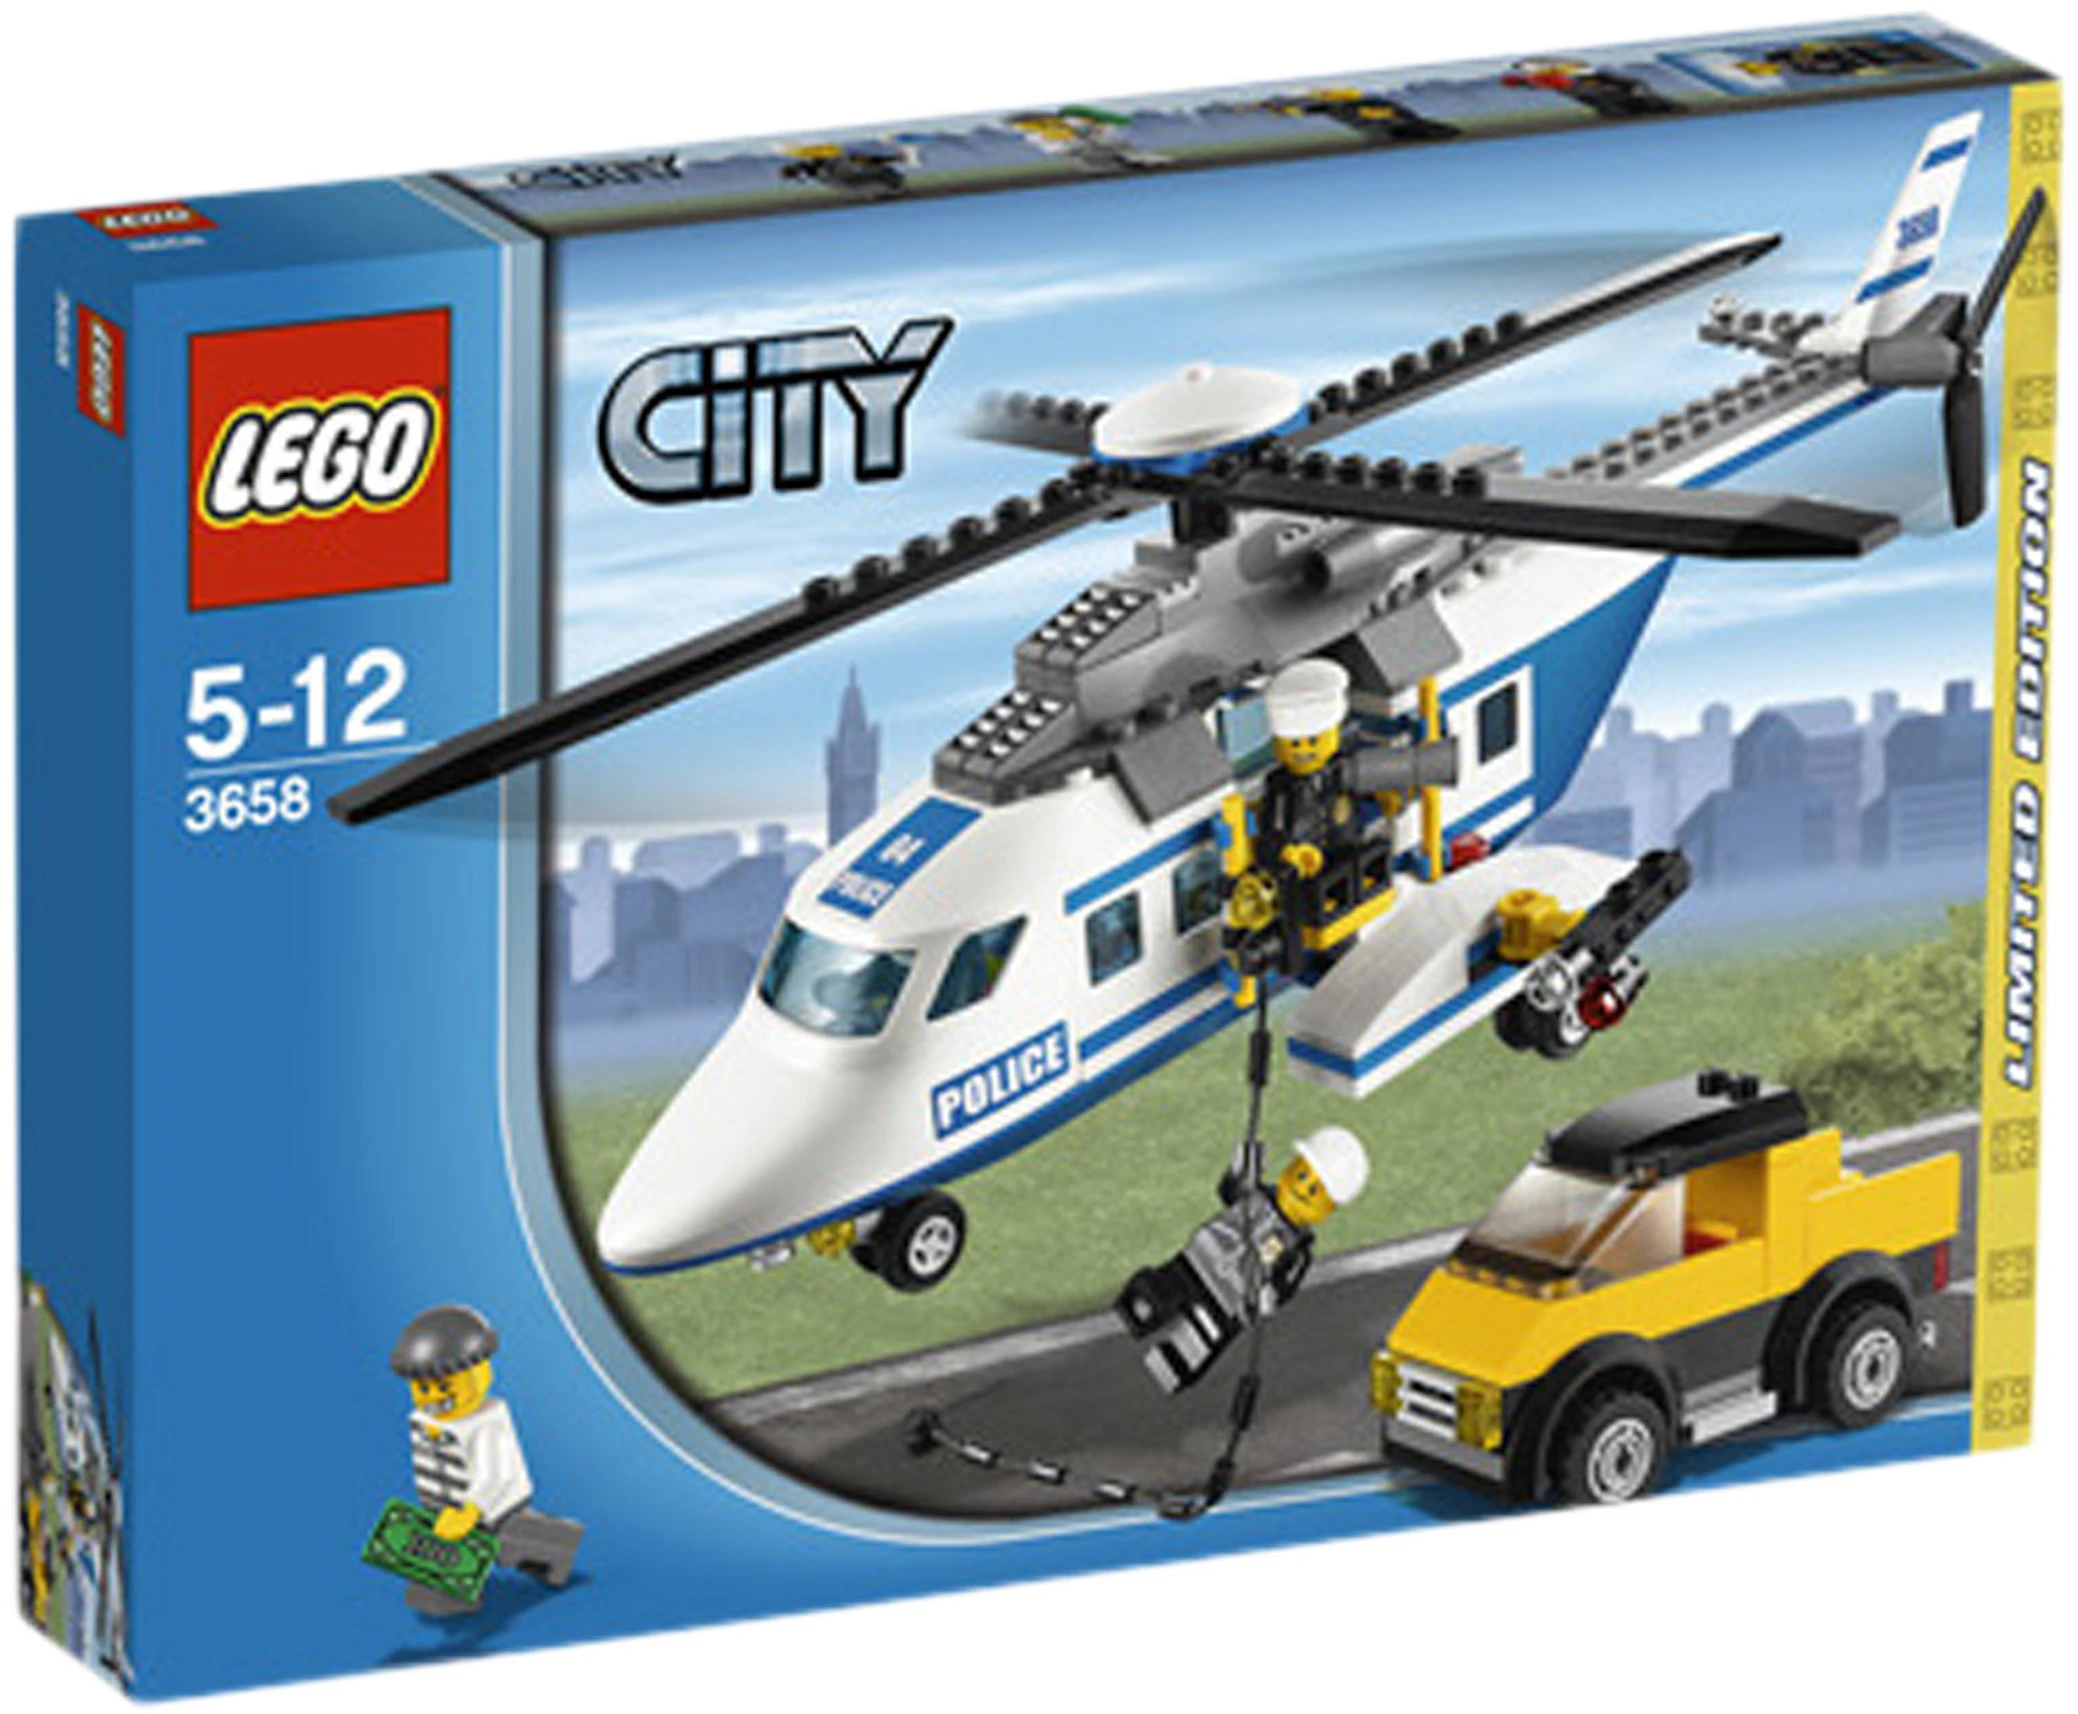 Geleend Contractie lettergreep LEGO City Police Helicopter Set 3658 - US